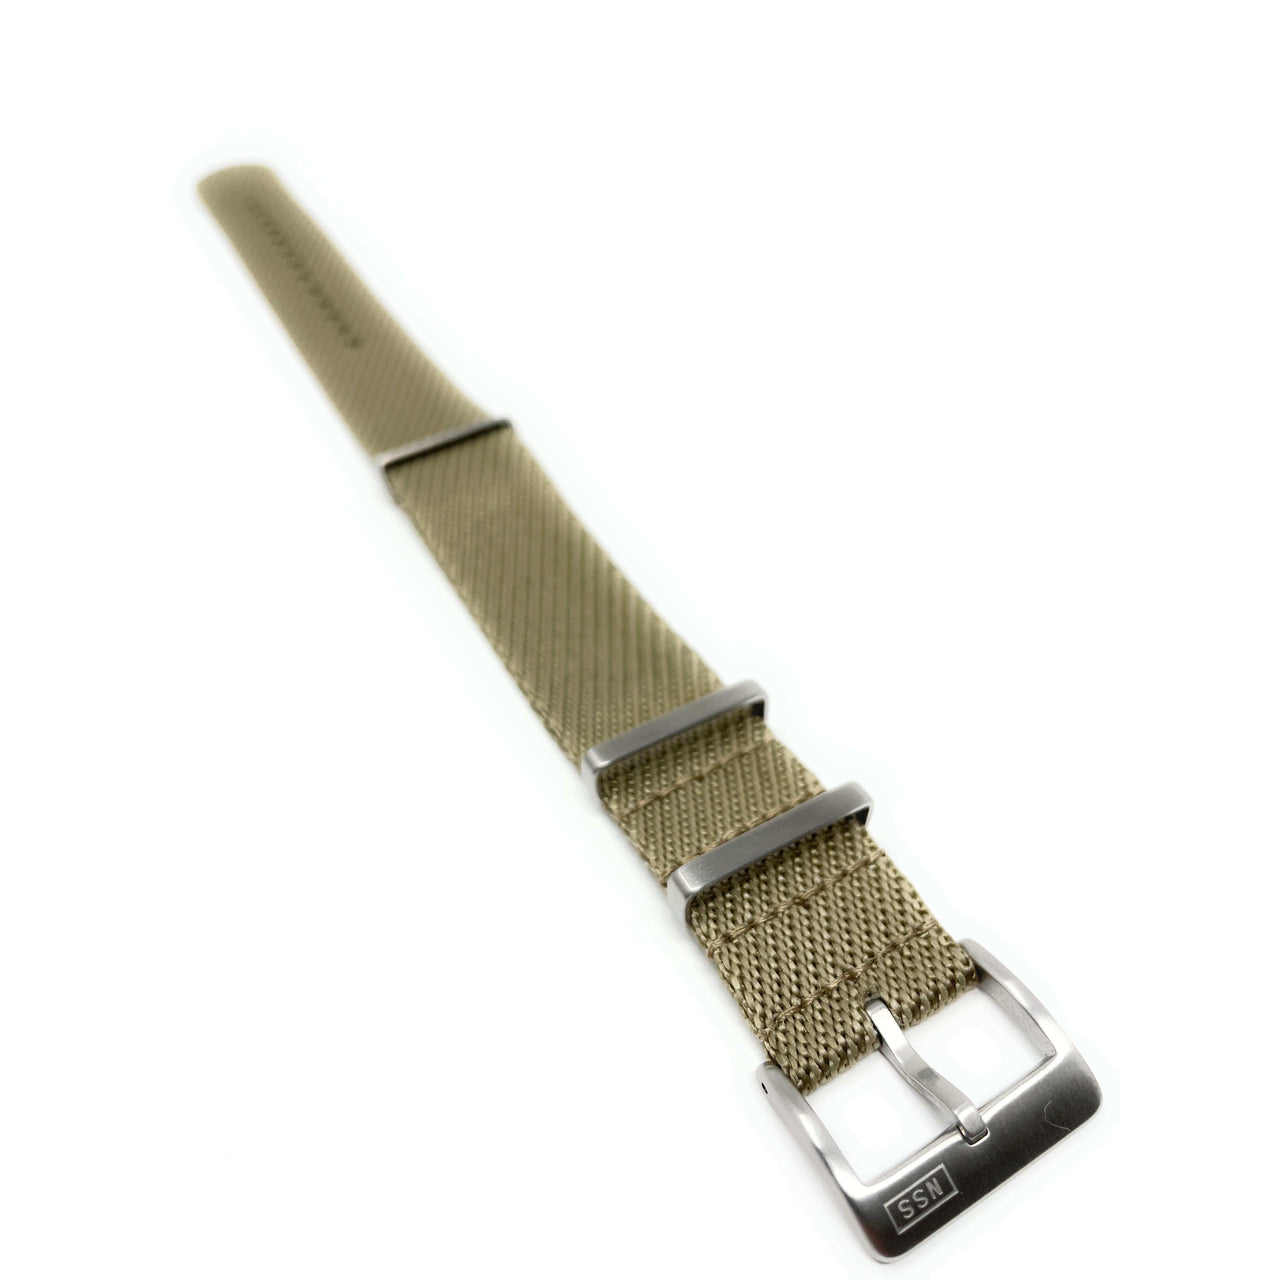 Premium Woven Military Style Watch Strap - Beige